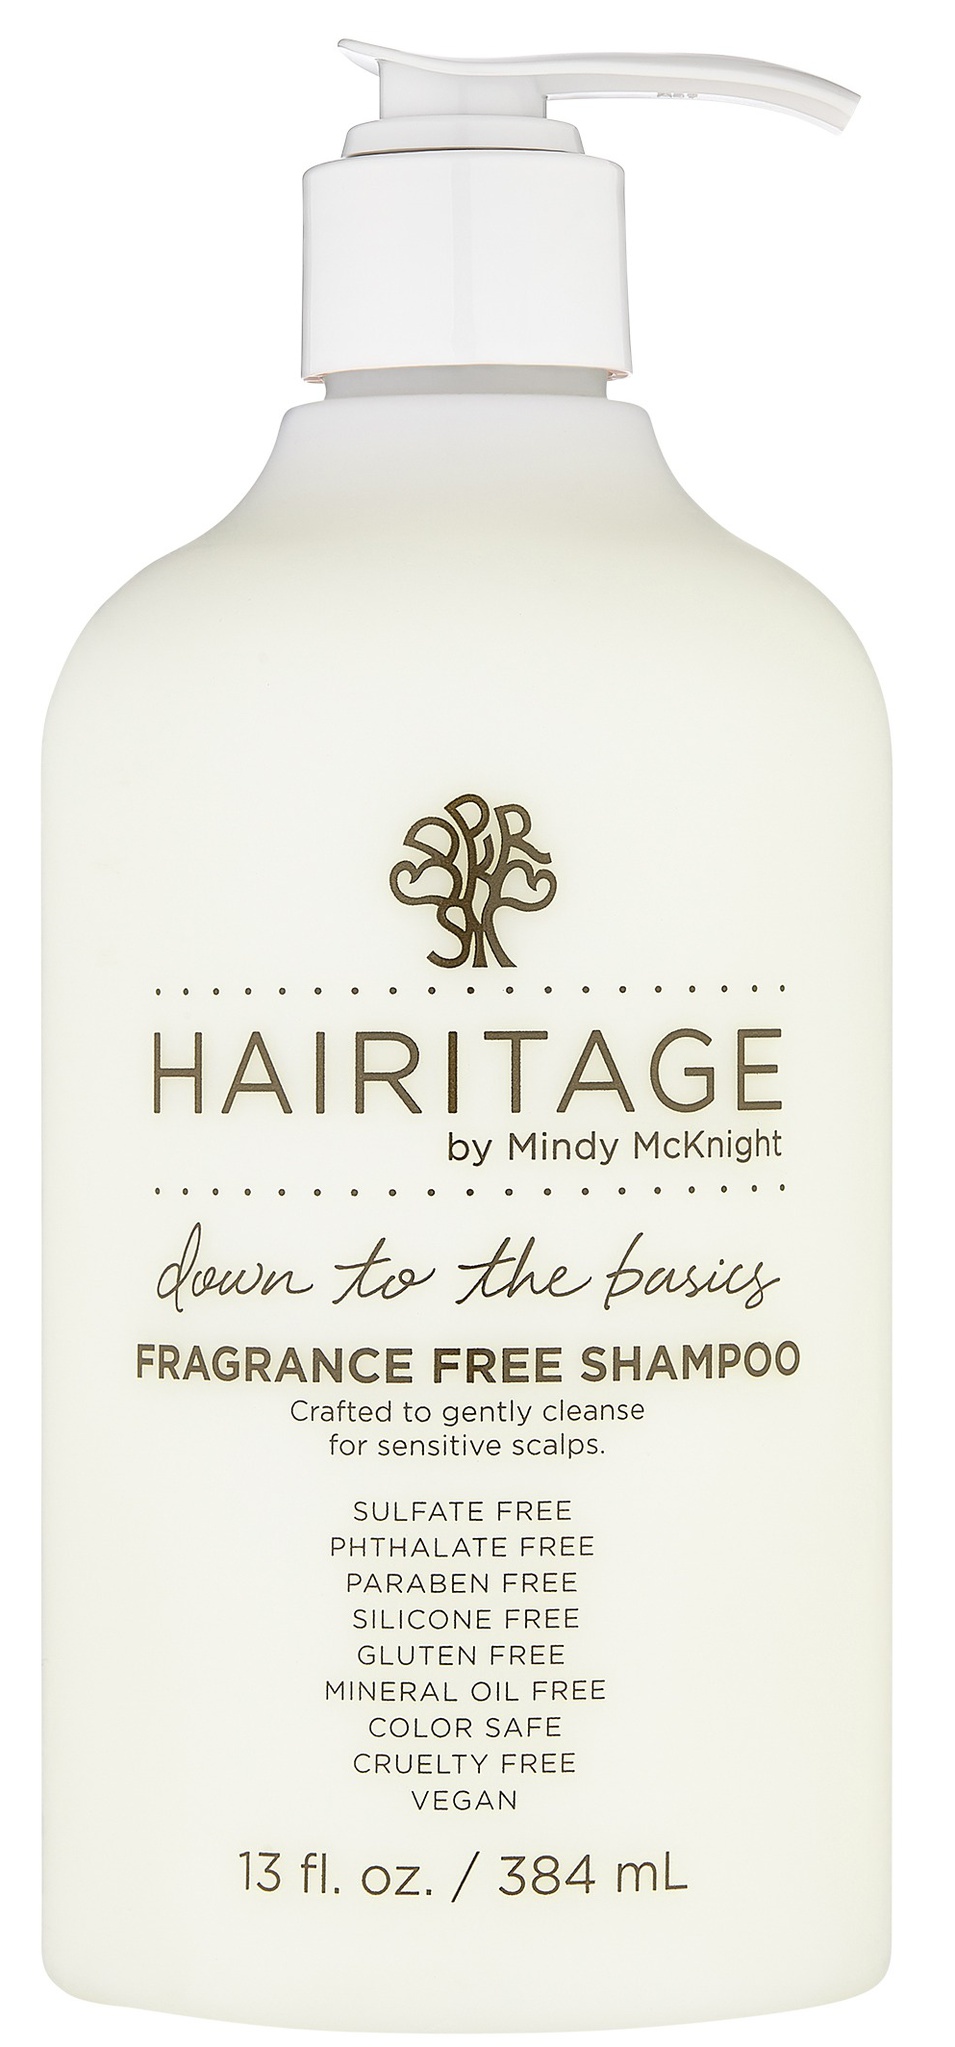 Hairitage by Mindy McKnight! Down To The Basics Fragrance Free Shampoo